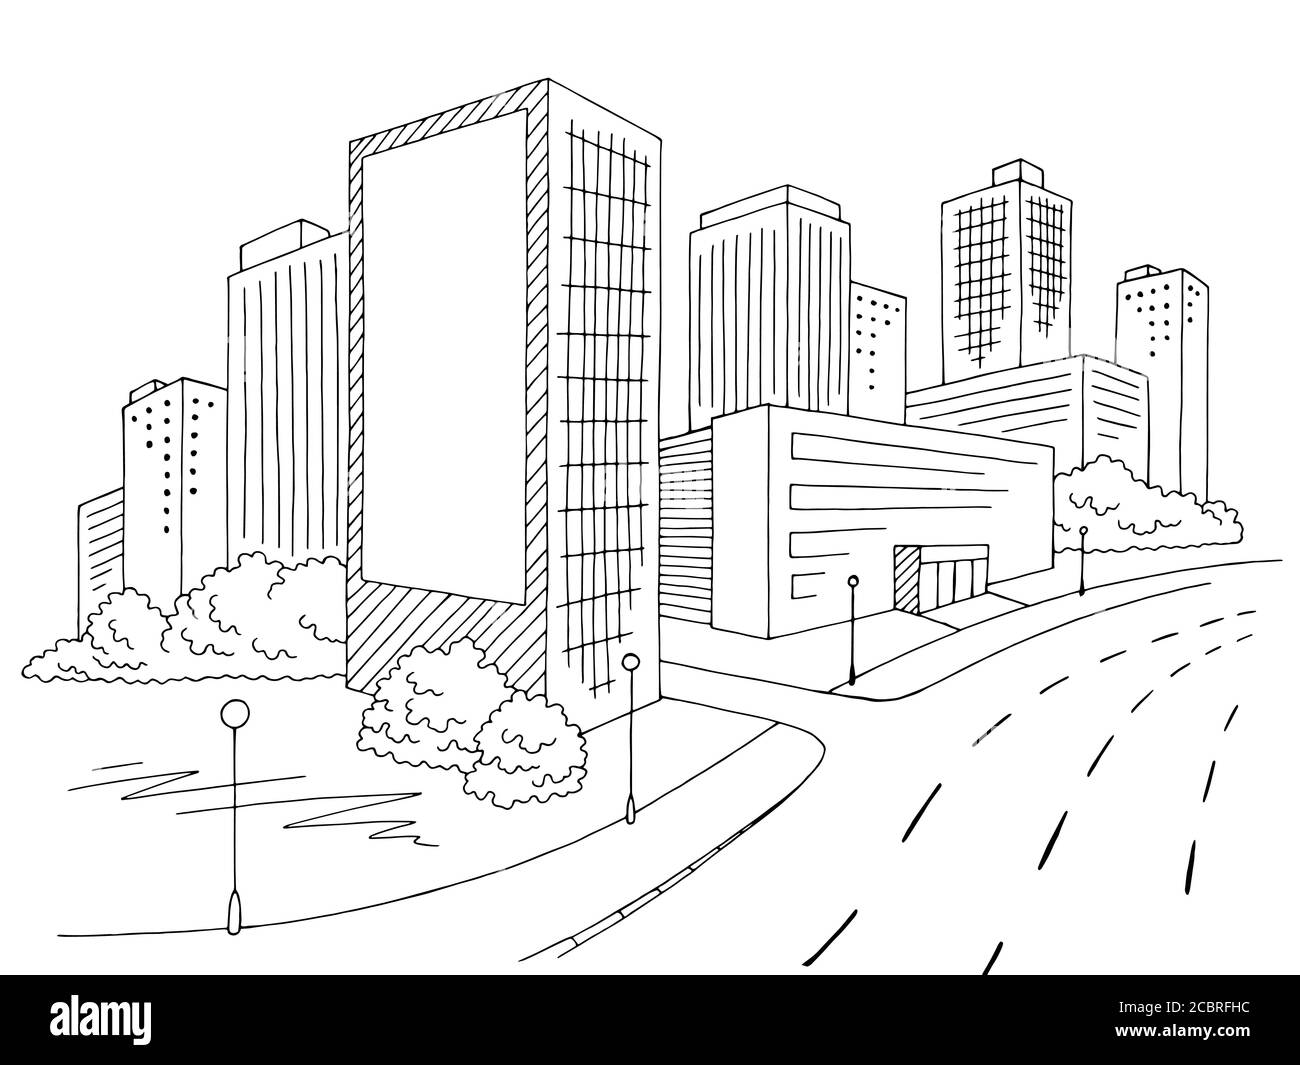 Park lake graphic black white city landscape sketch illustration vector   Stock Image  Everypixel